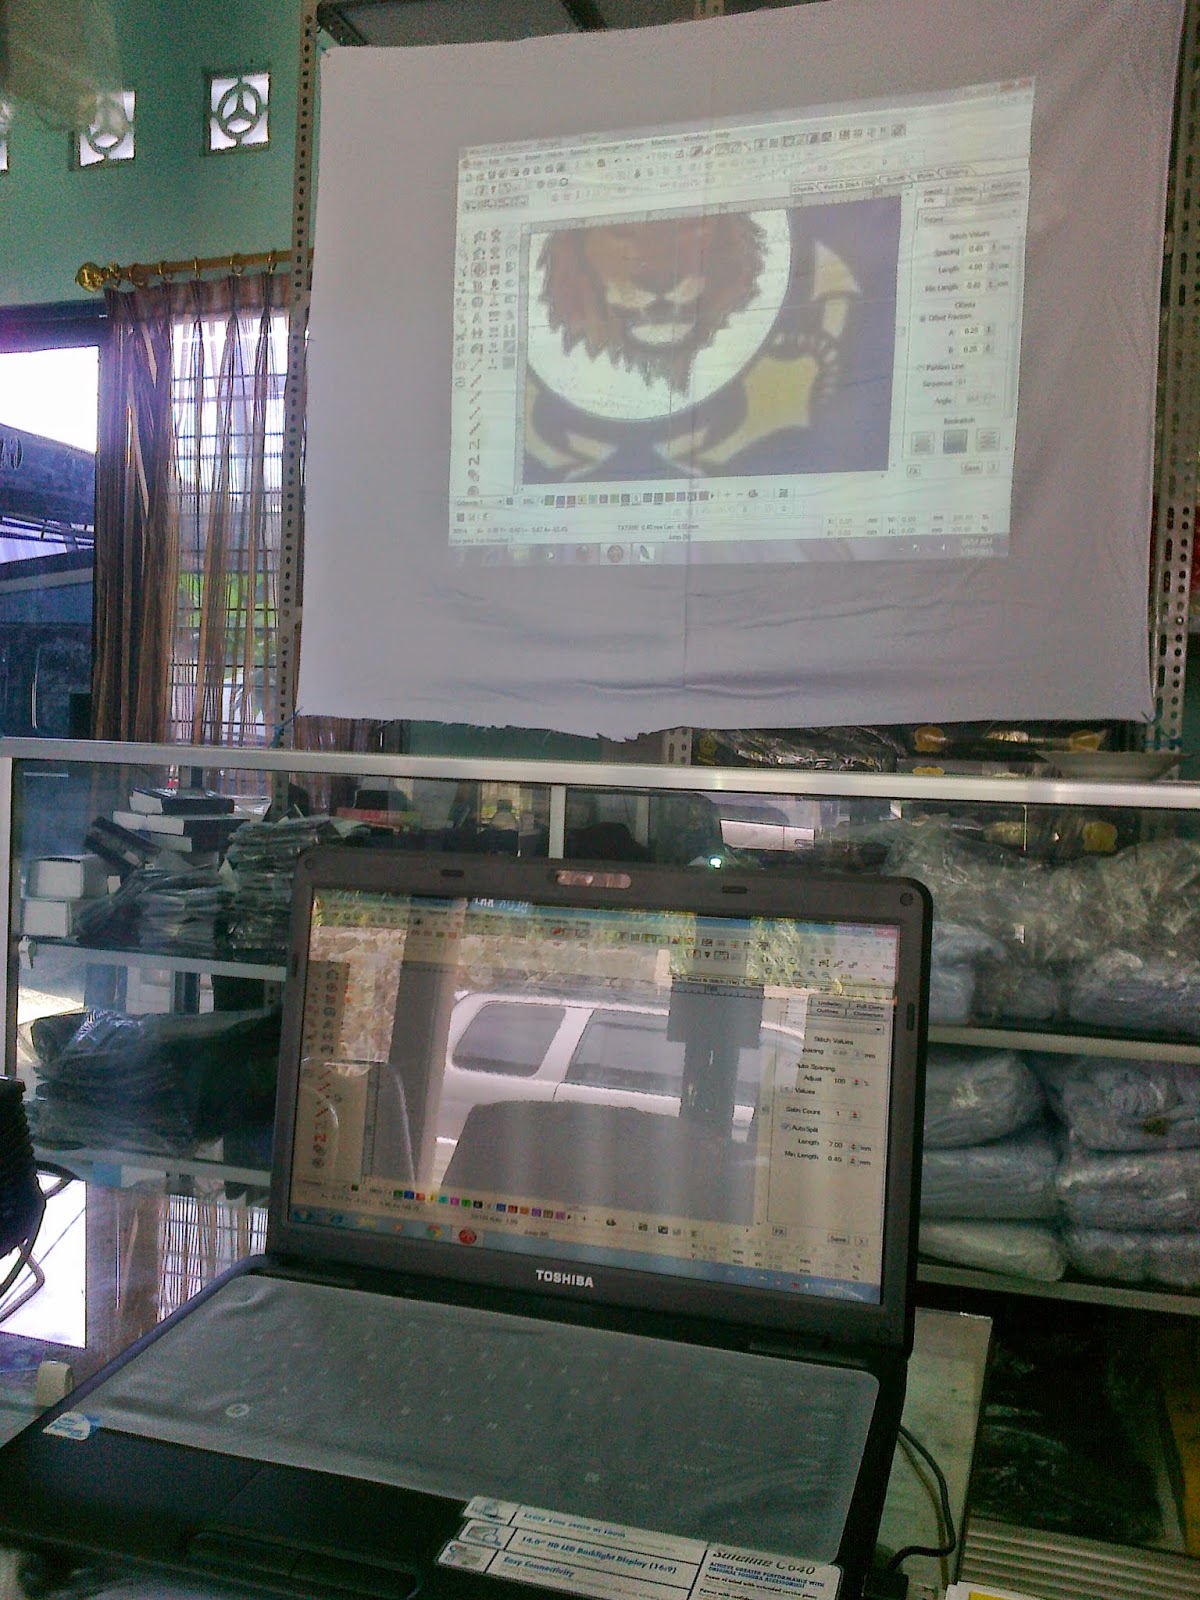 kursus wilcom menggunakan proyektor